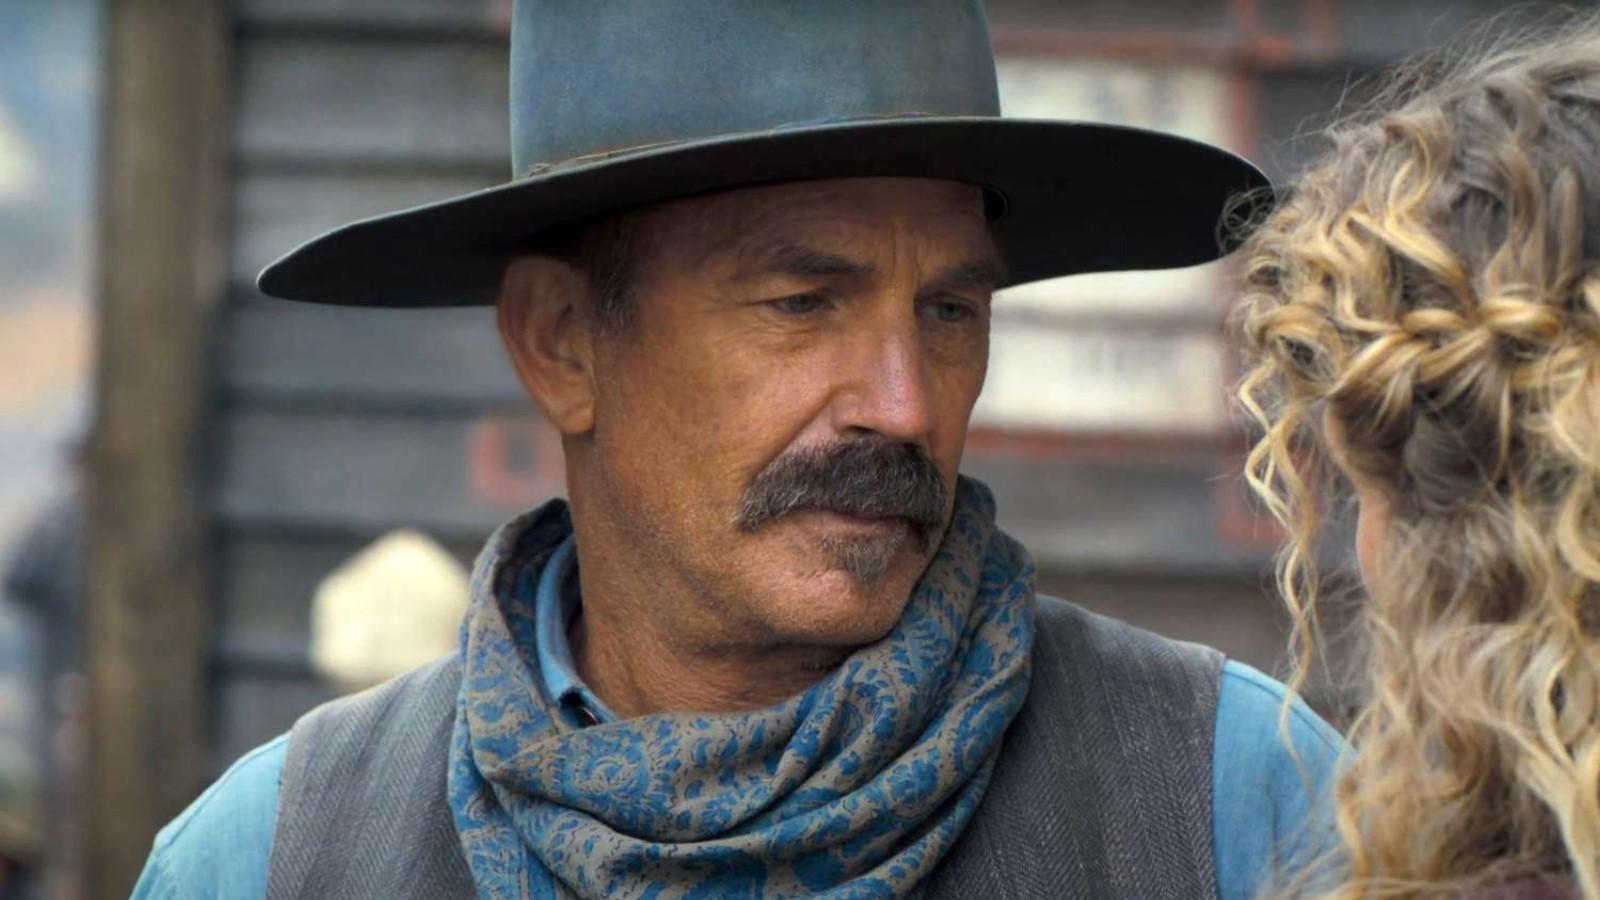 Kevin Costner in Horizon: An American Saga, wearing a cowboy hat and looking at a woman